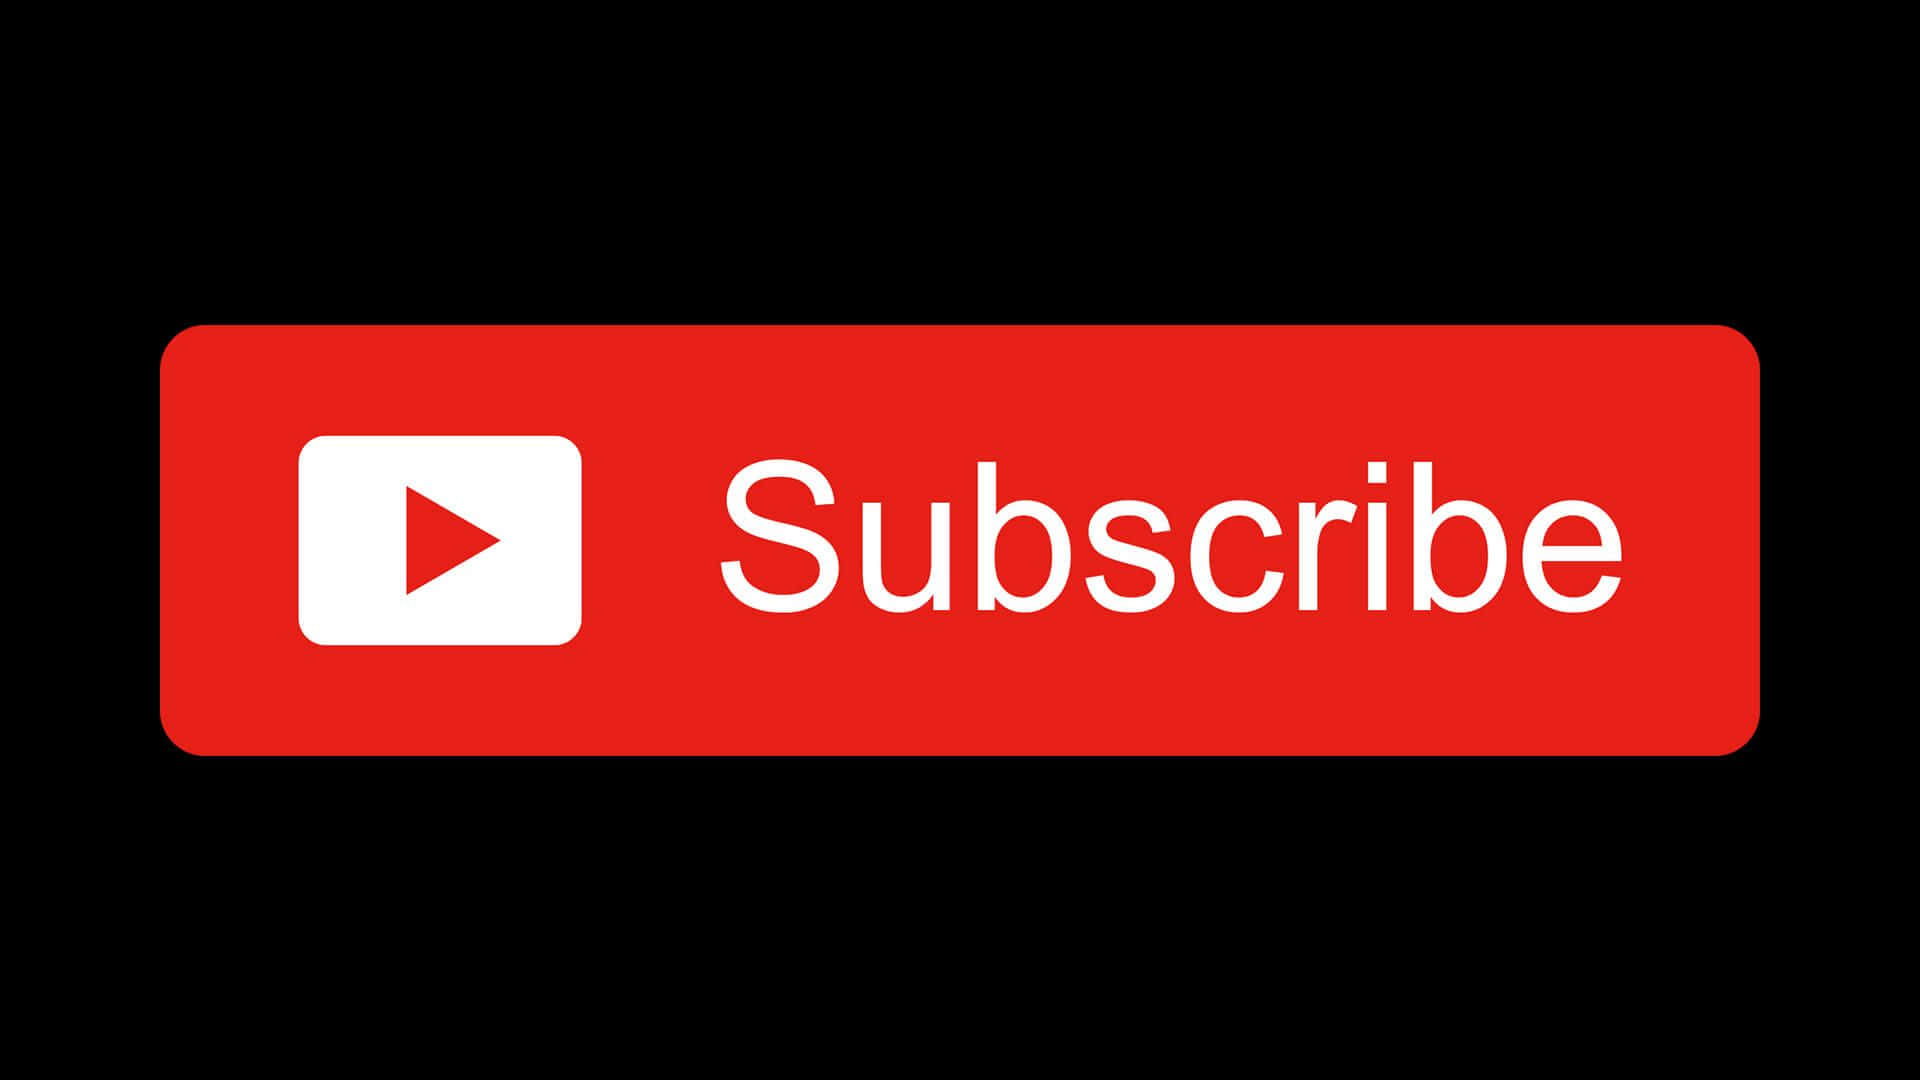 Striking YouTube Logo on a Radiant Red Background